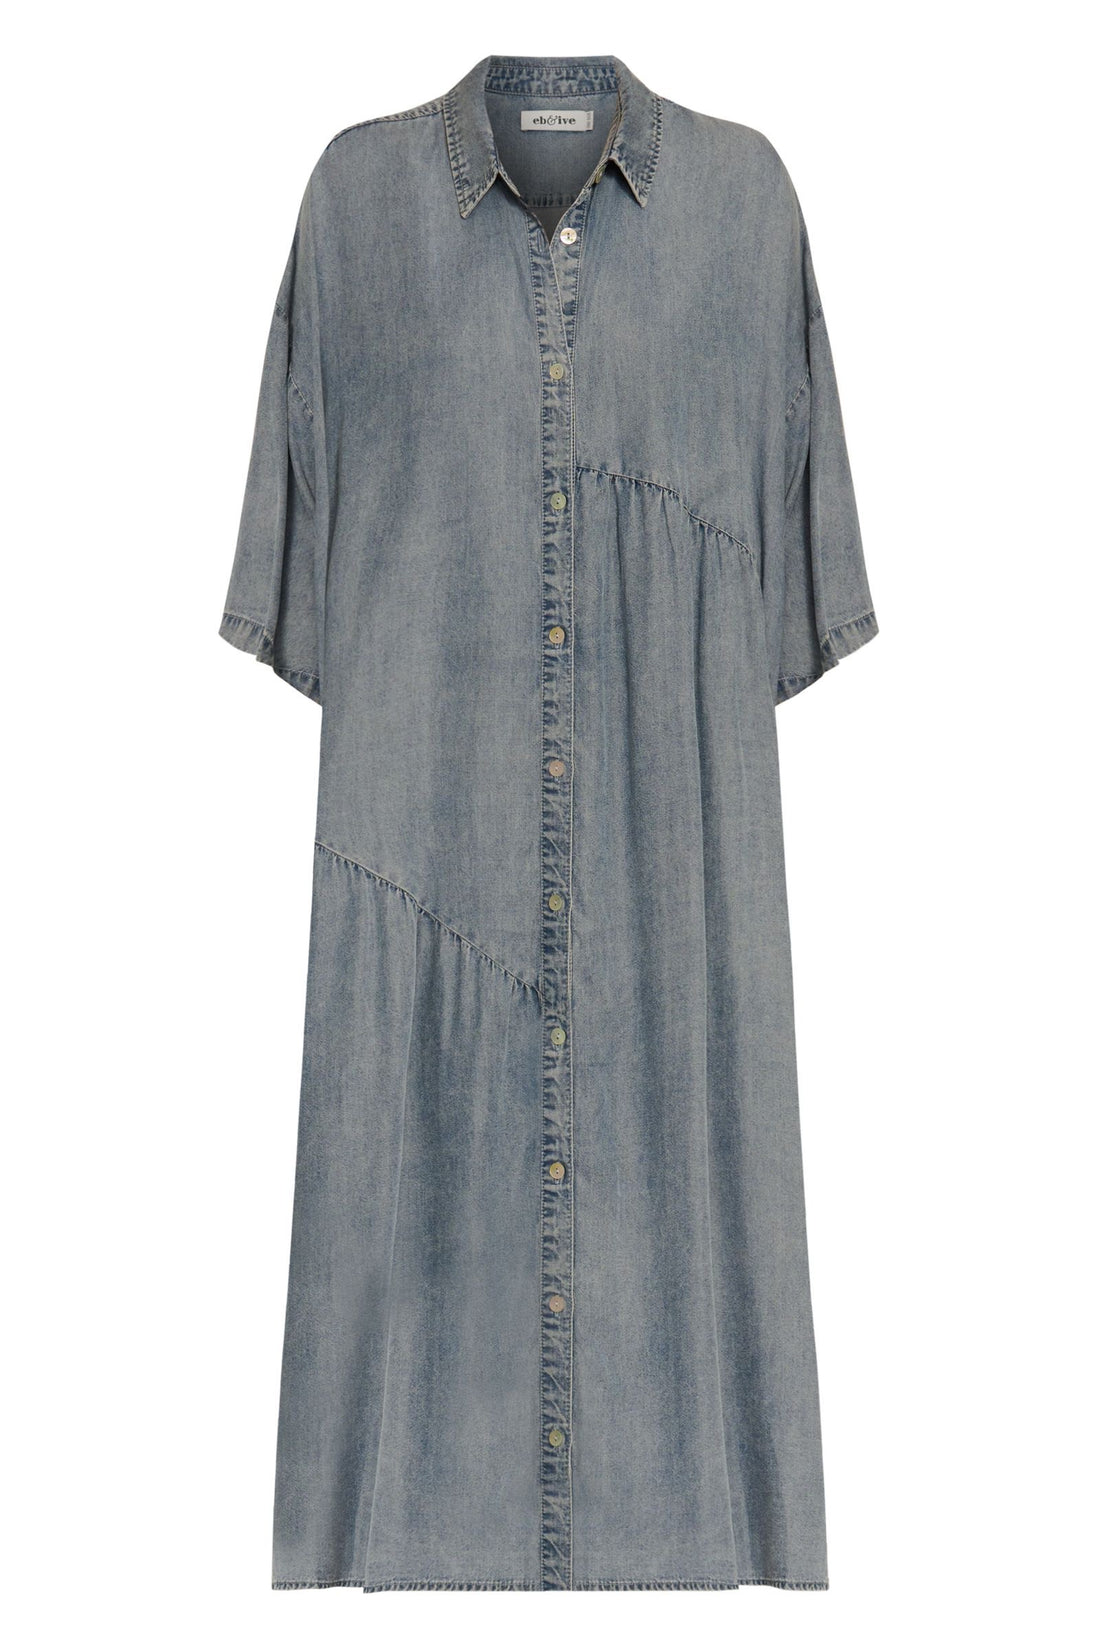 Eb &amp; Ive Ellie Denim Dress - One size